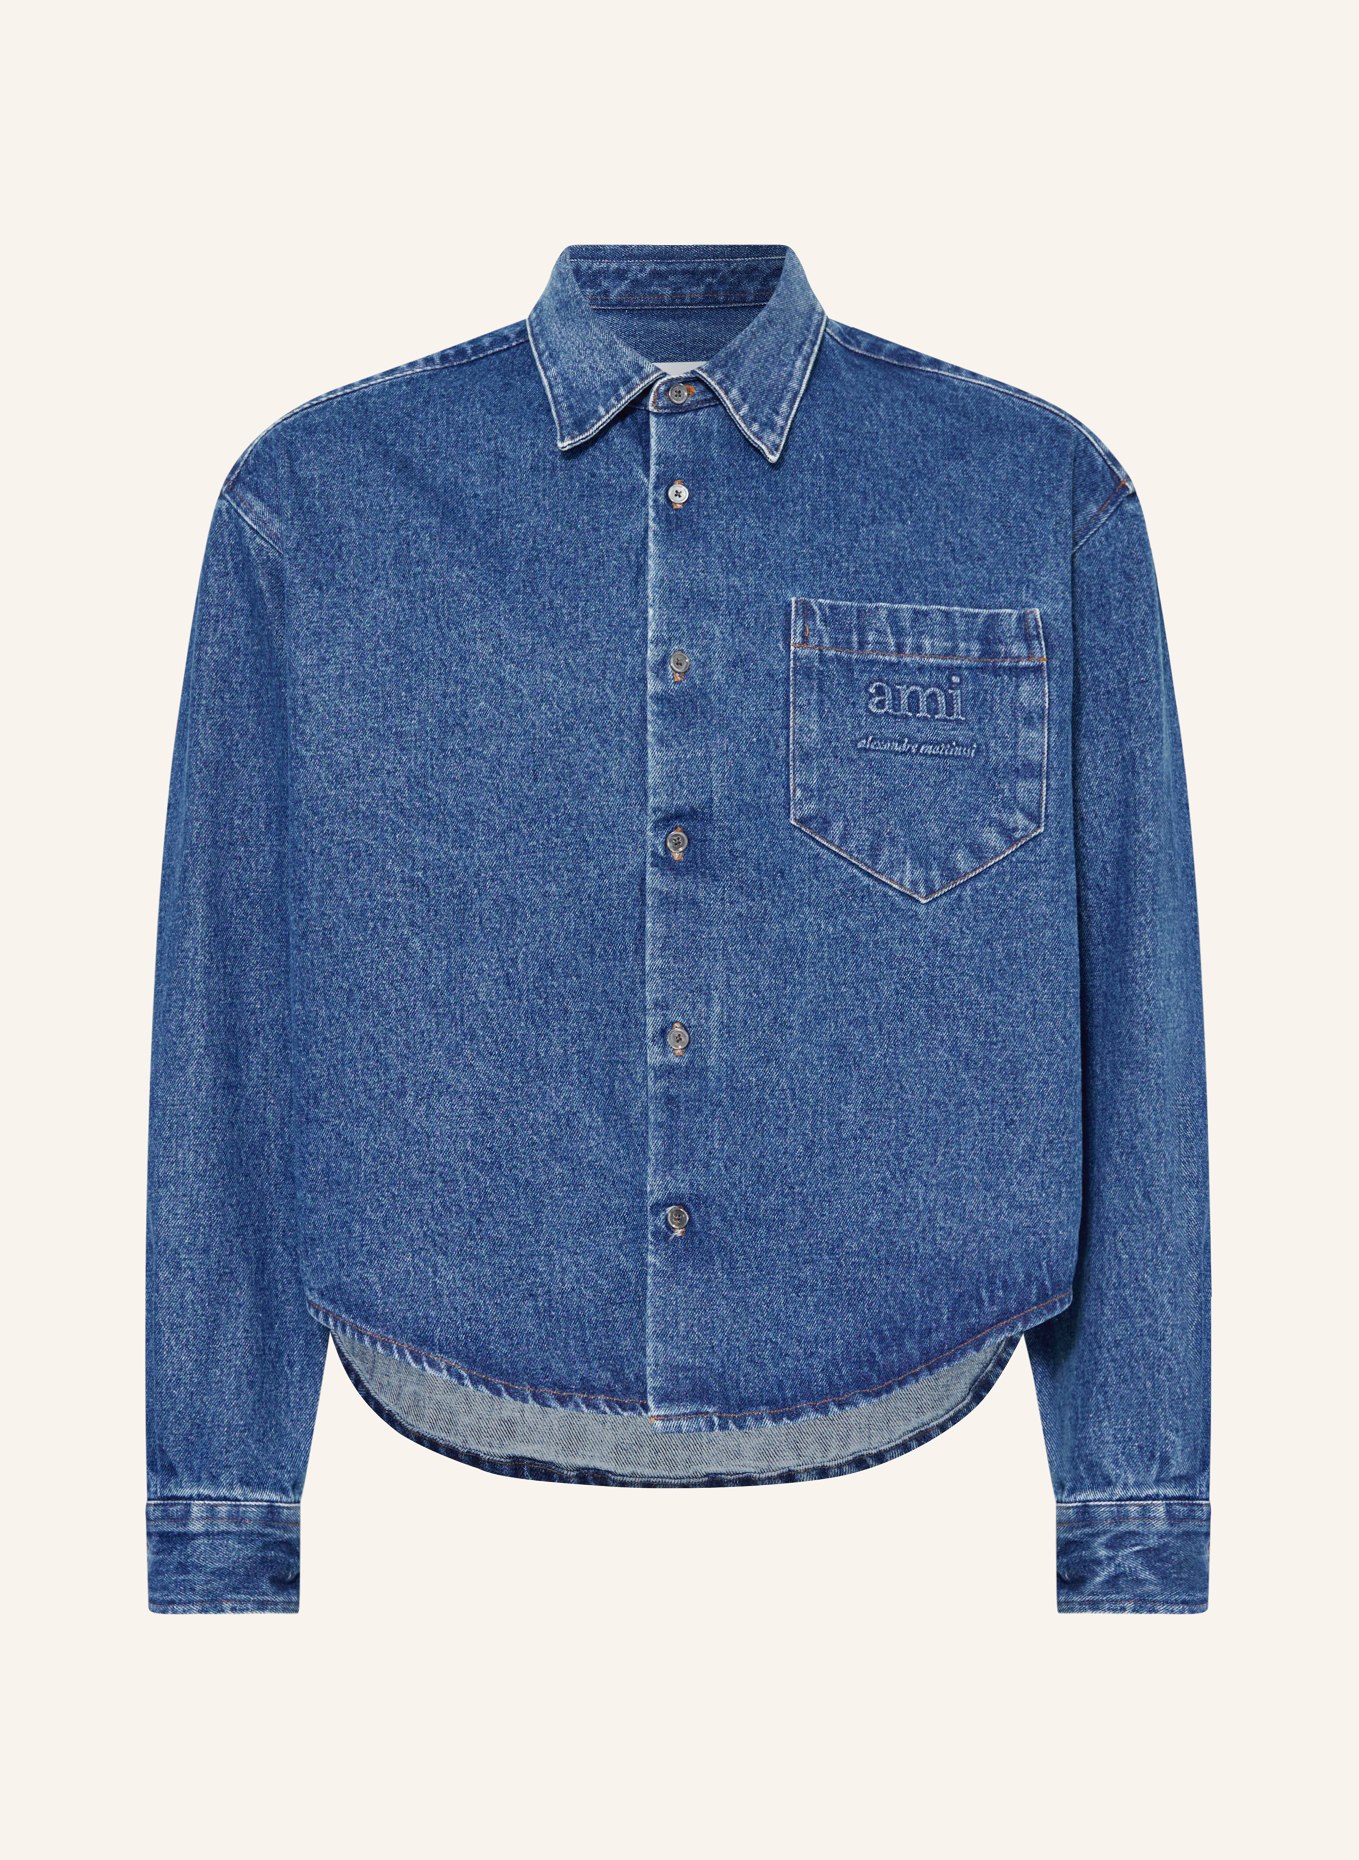 AMI PARIS Jeans-Overjacket, Farbe: BLAU (Bild 1)